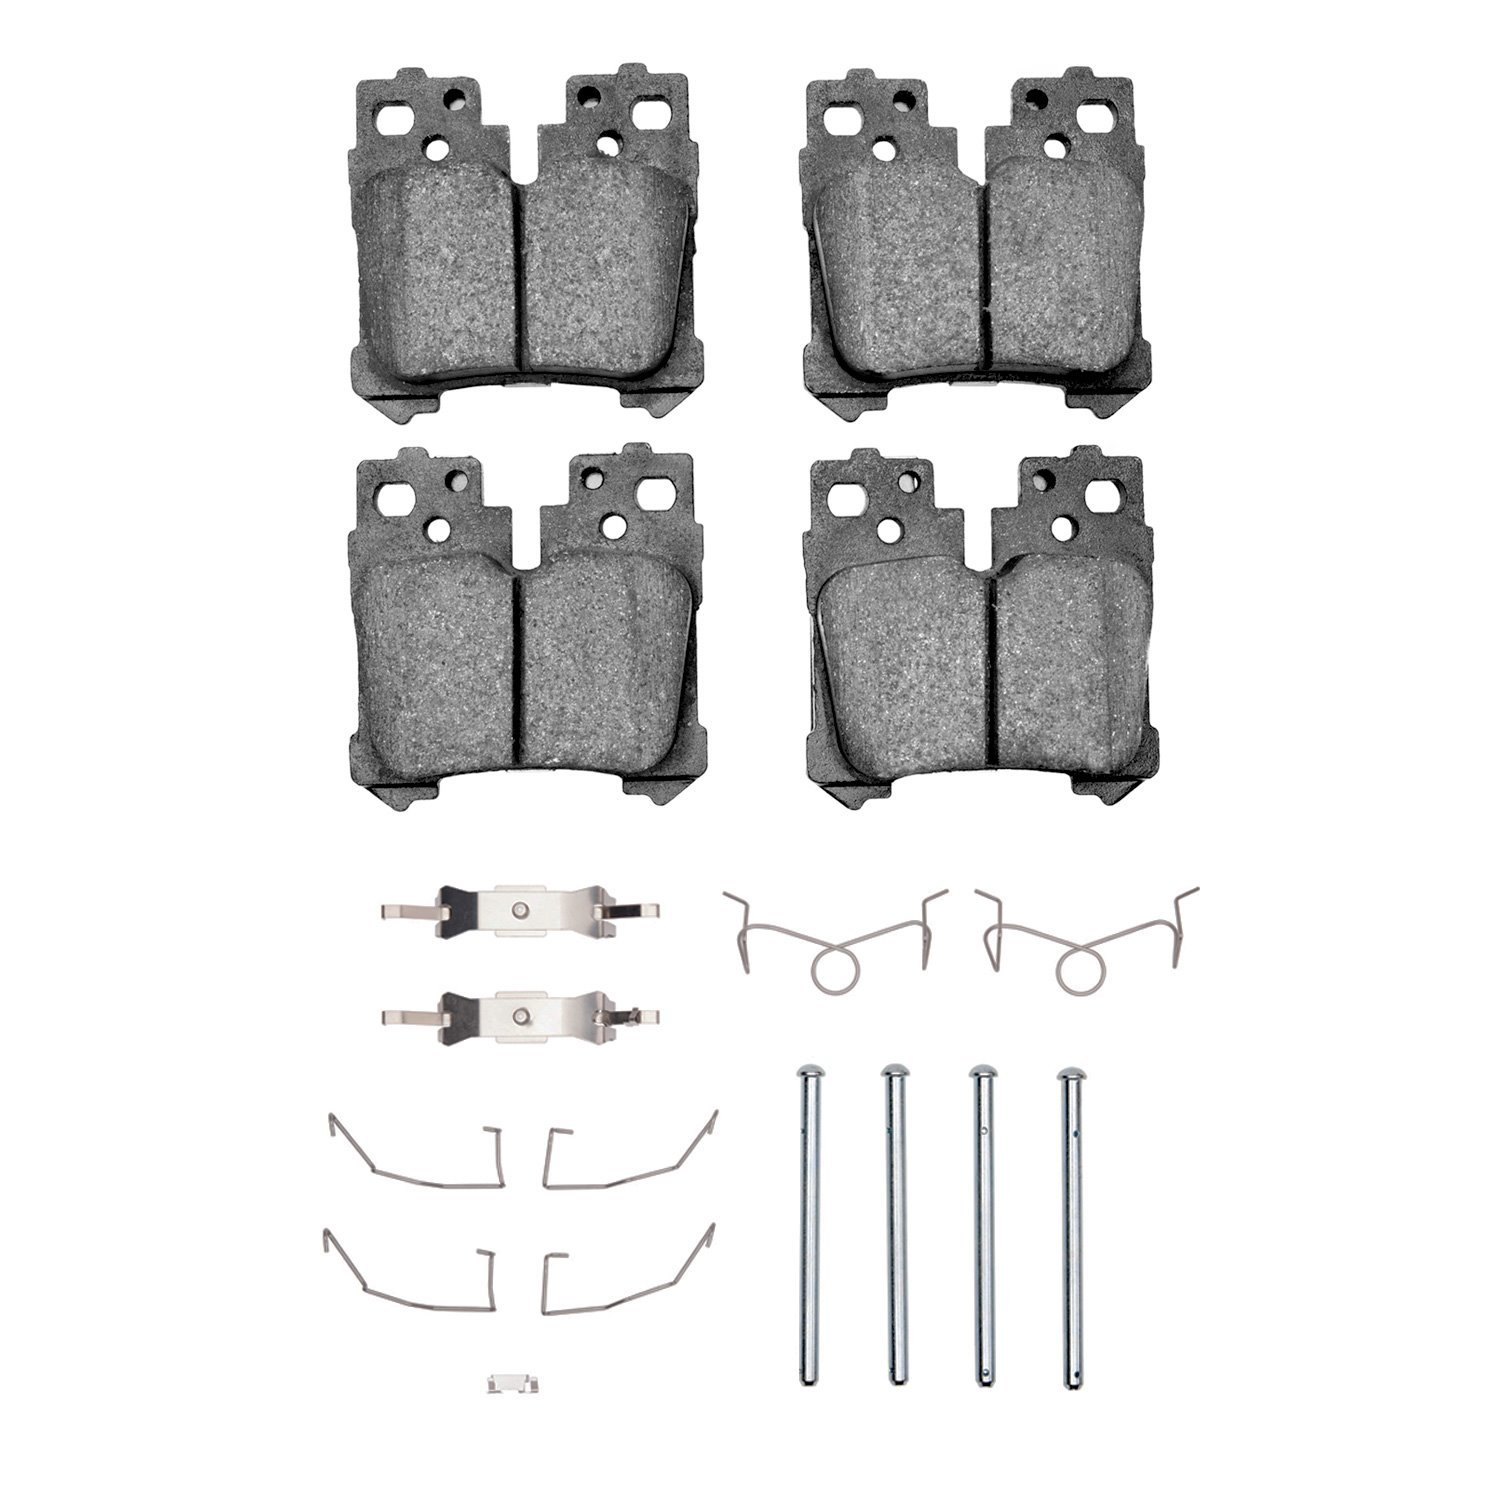 1600-1283-01 5000 Euro Ceramic Brake Pads & Hardware Kit, Fits Select Lexus/Toyota/Scion, Position: Rear